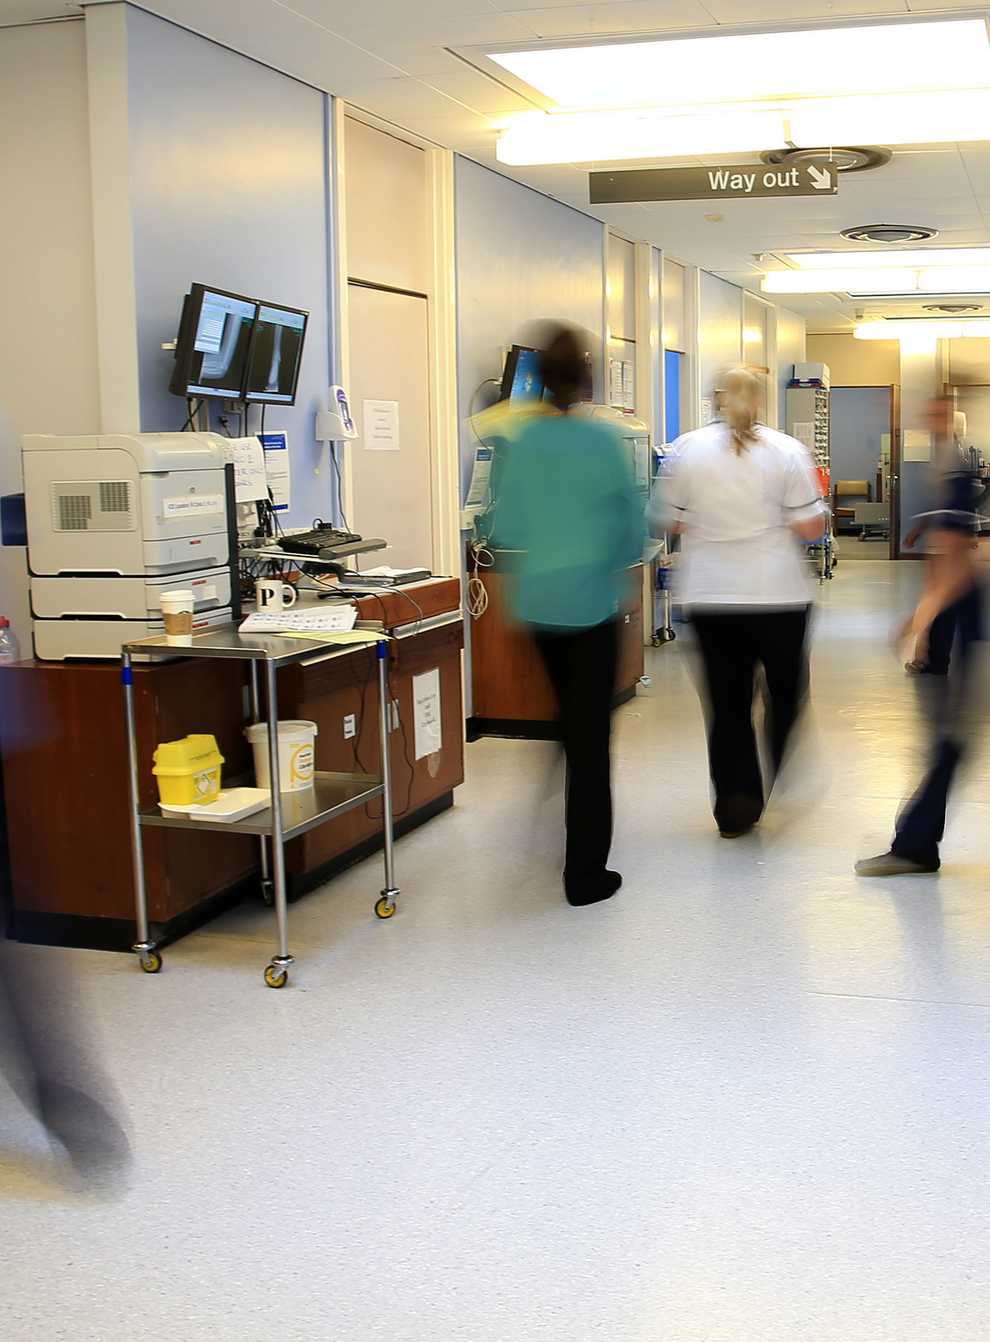 Staff on a hospital ward